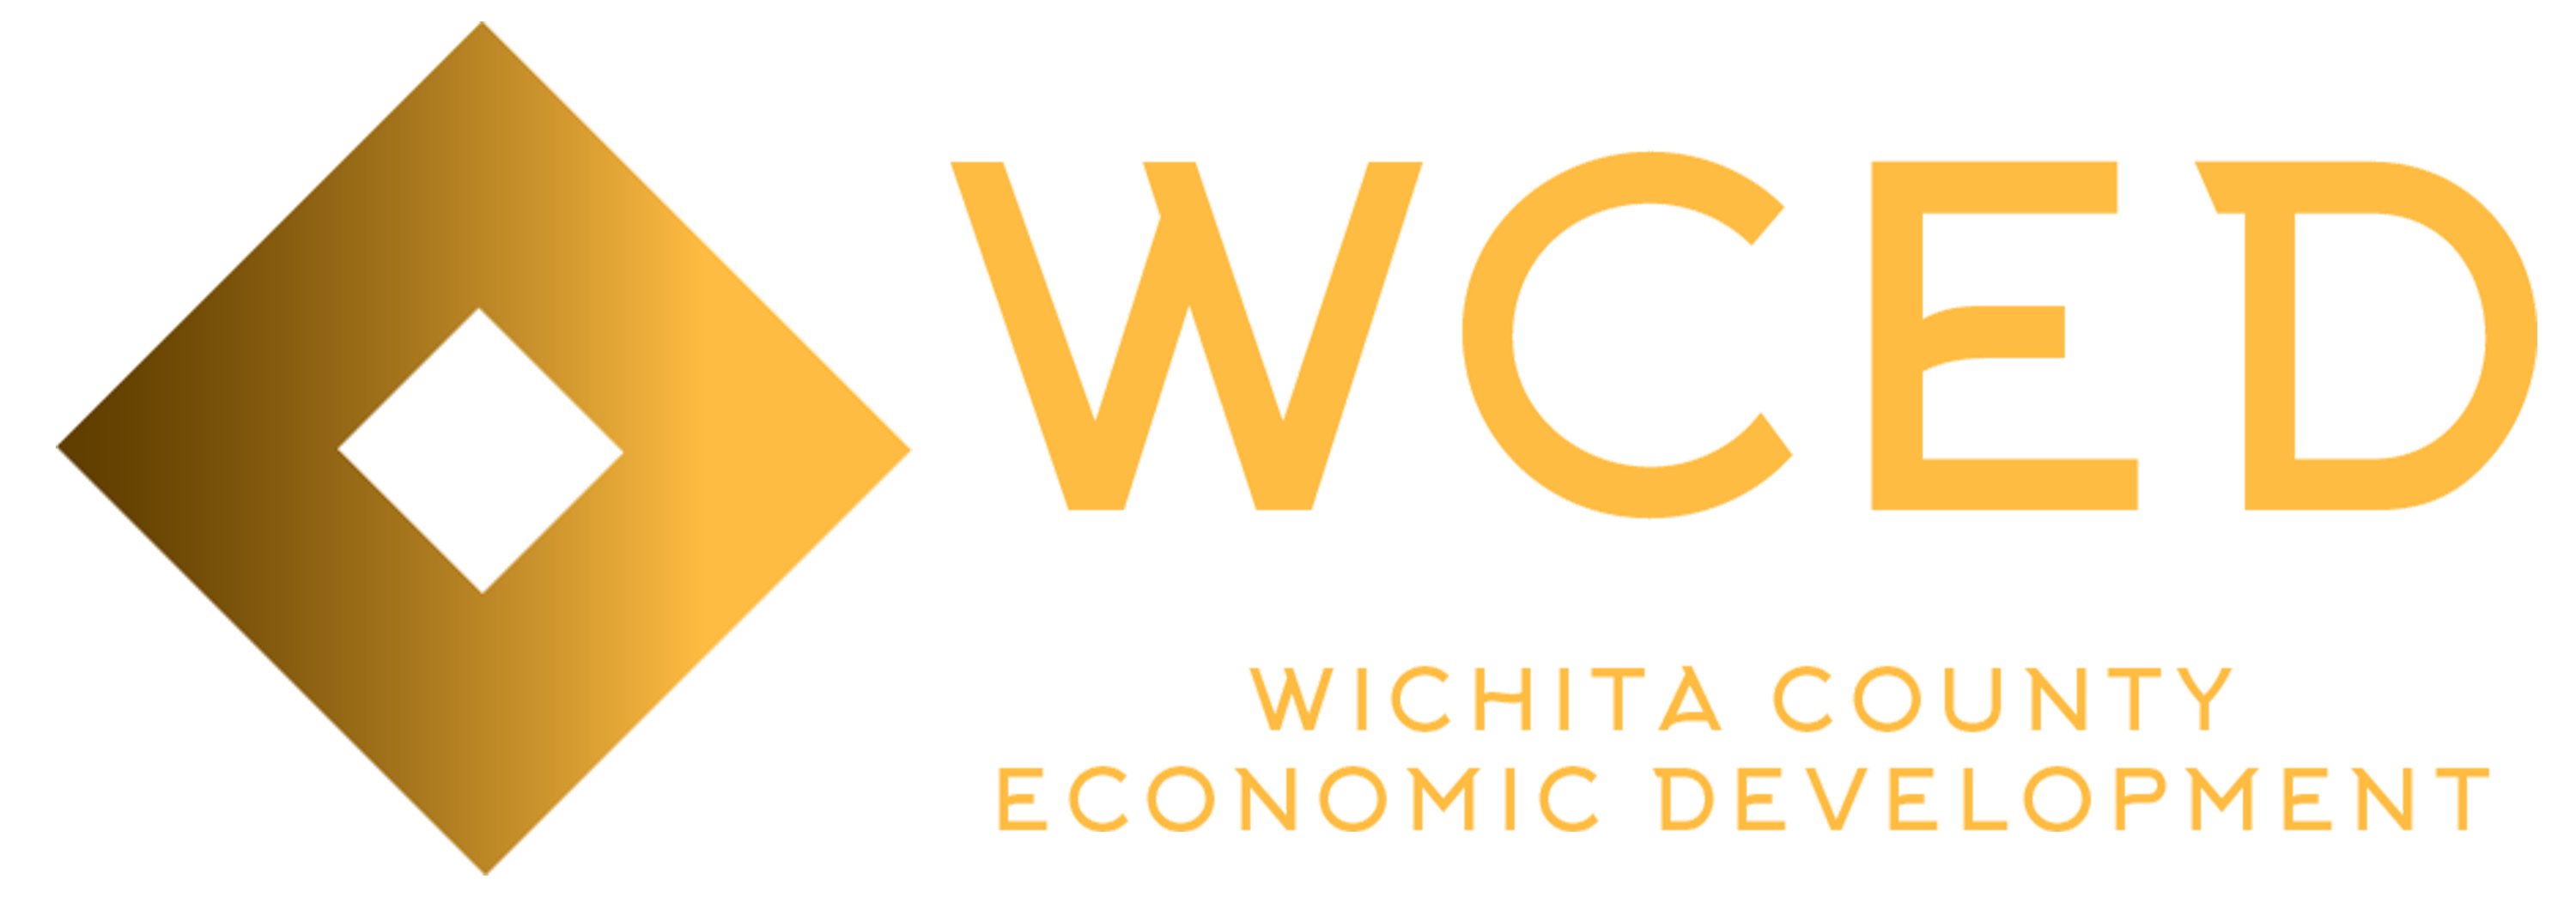 Wichita County Economic Development logo